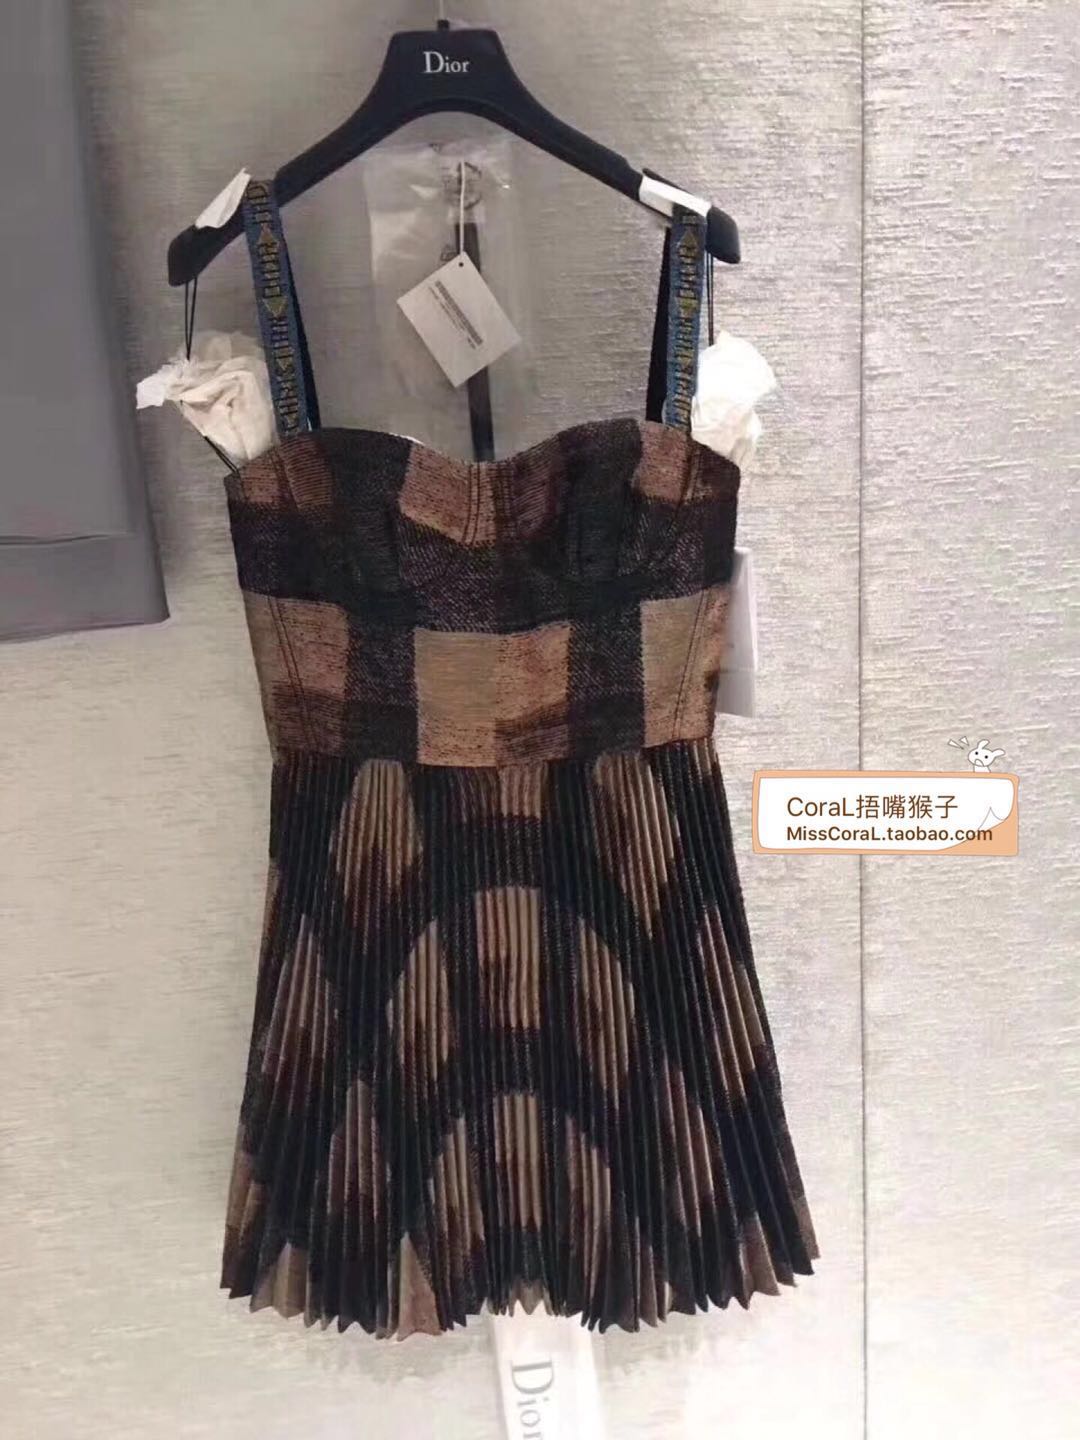 【CoraL捂嘴猴子】Dior ANGELABABY 同款 吊带裙